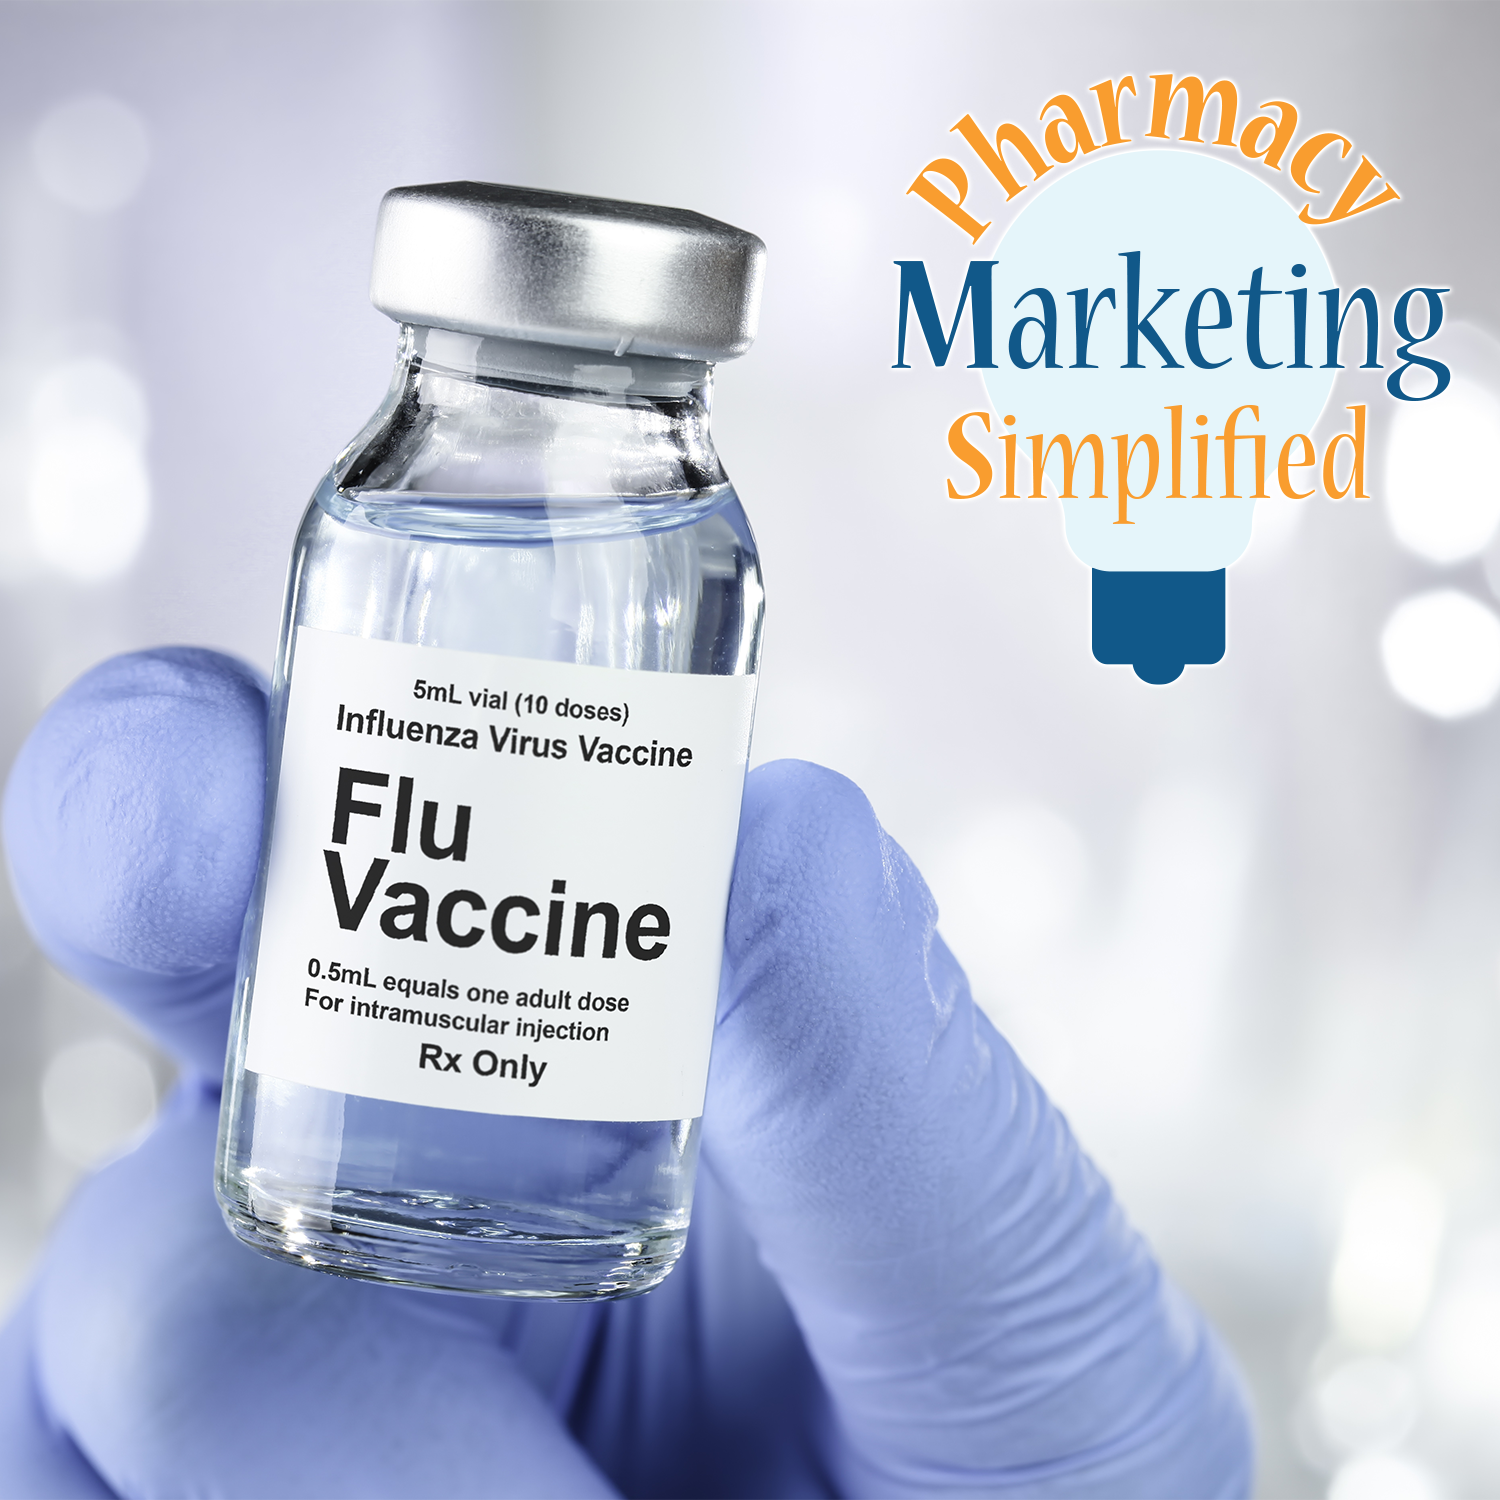 Educational Marketing during Flu Season | Pharmacy Marketing Simplified